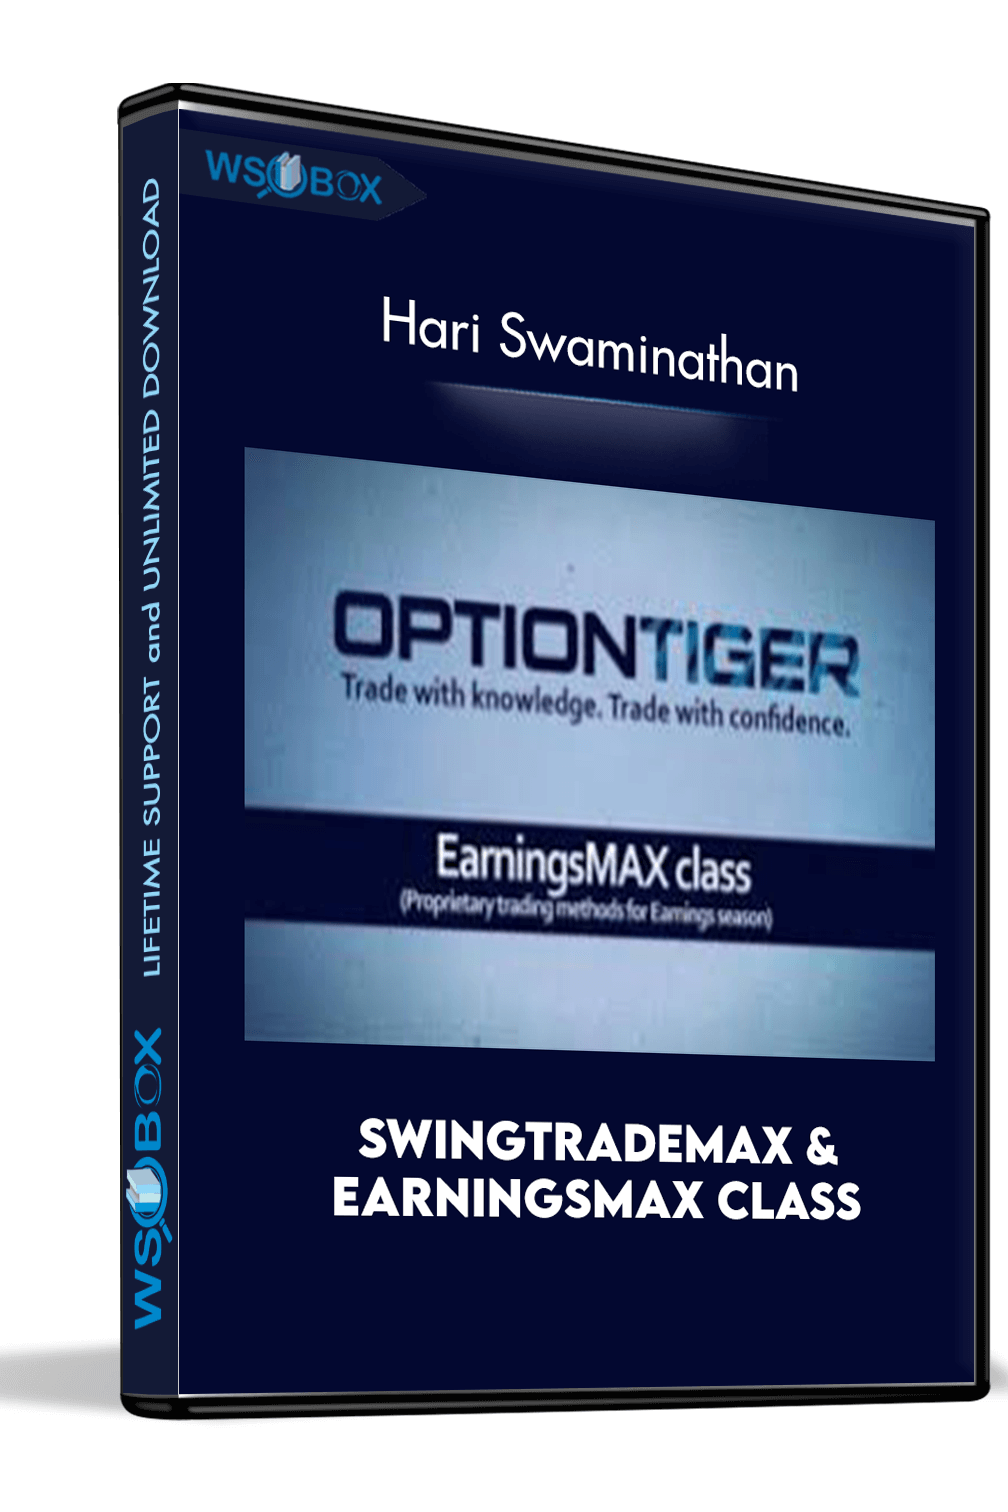 swingtrademax-earningsmax-class-hari-swaminathan